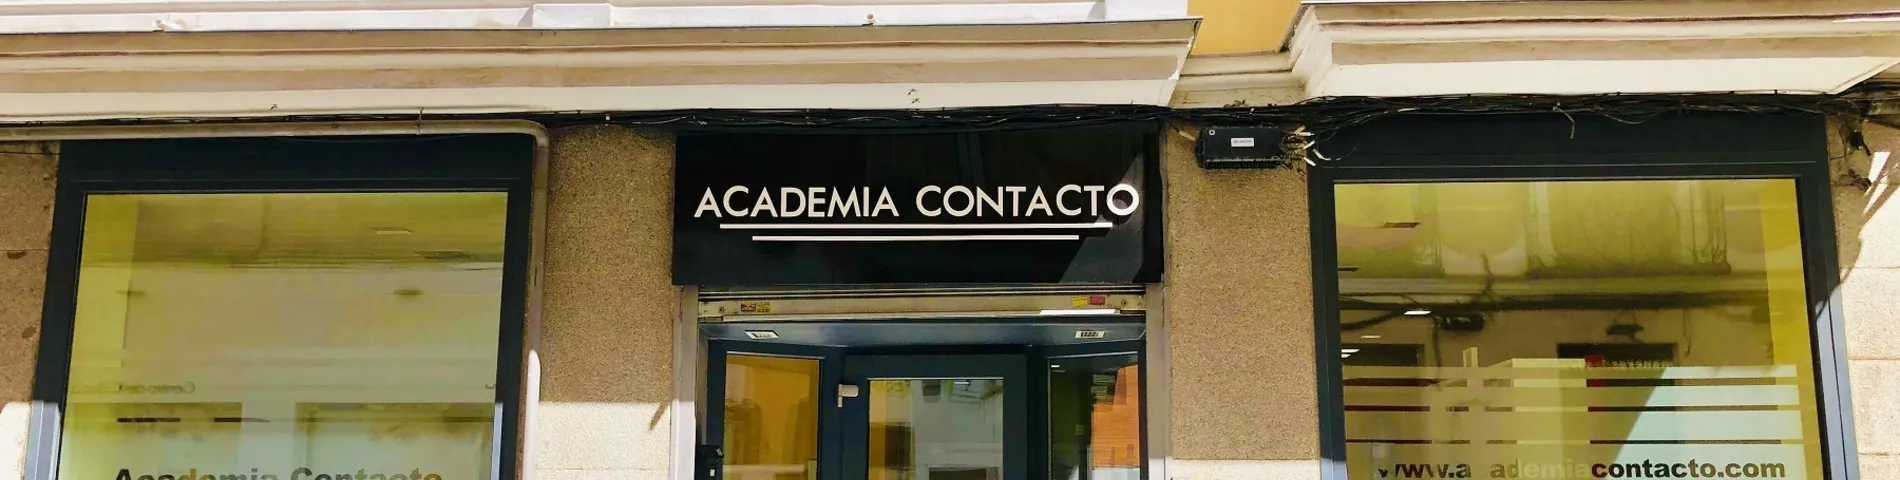 Academia Contacto immagine 1